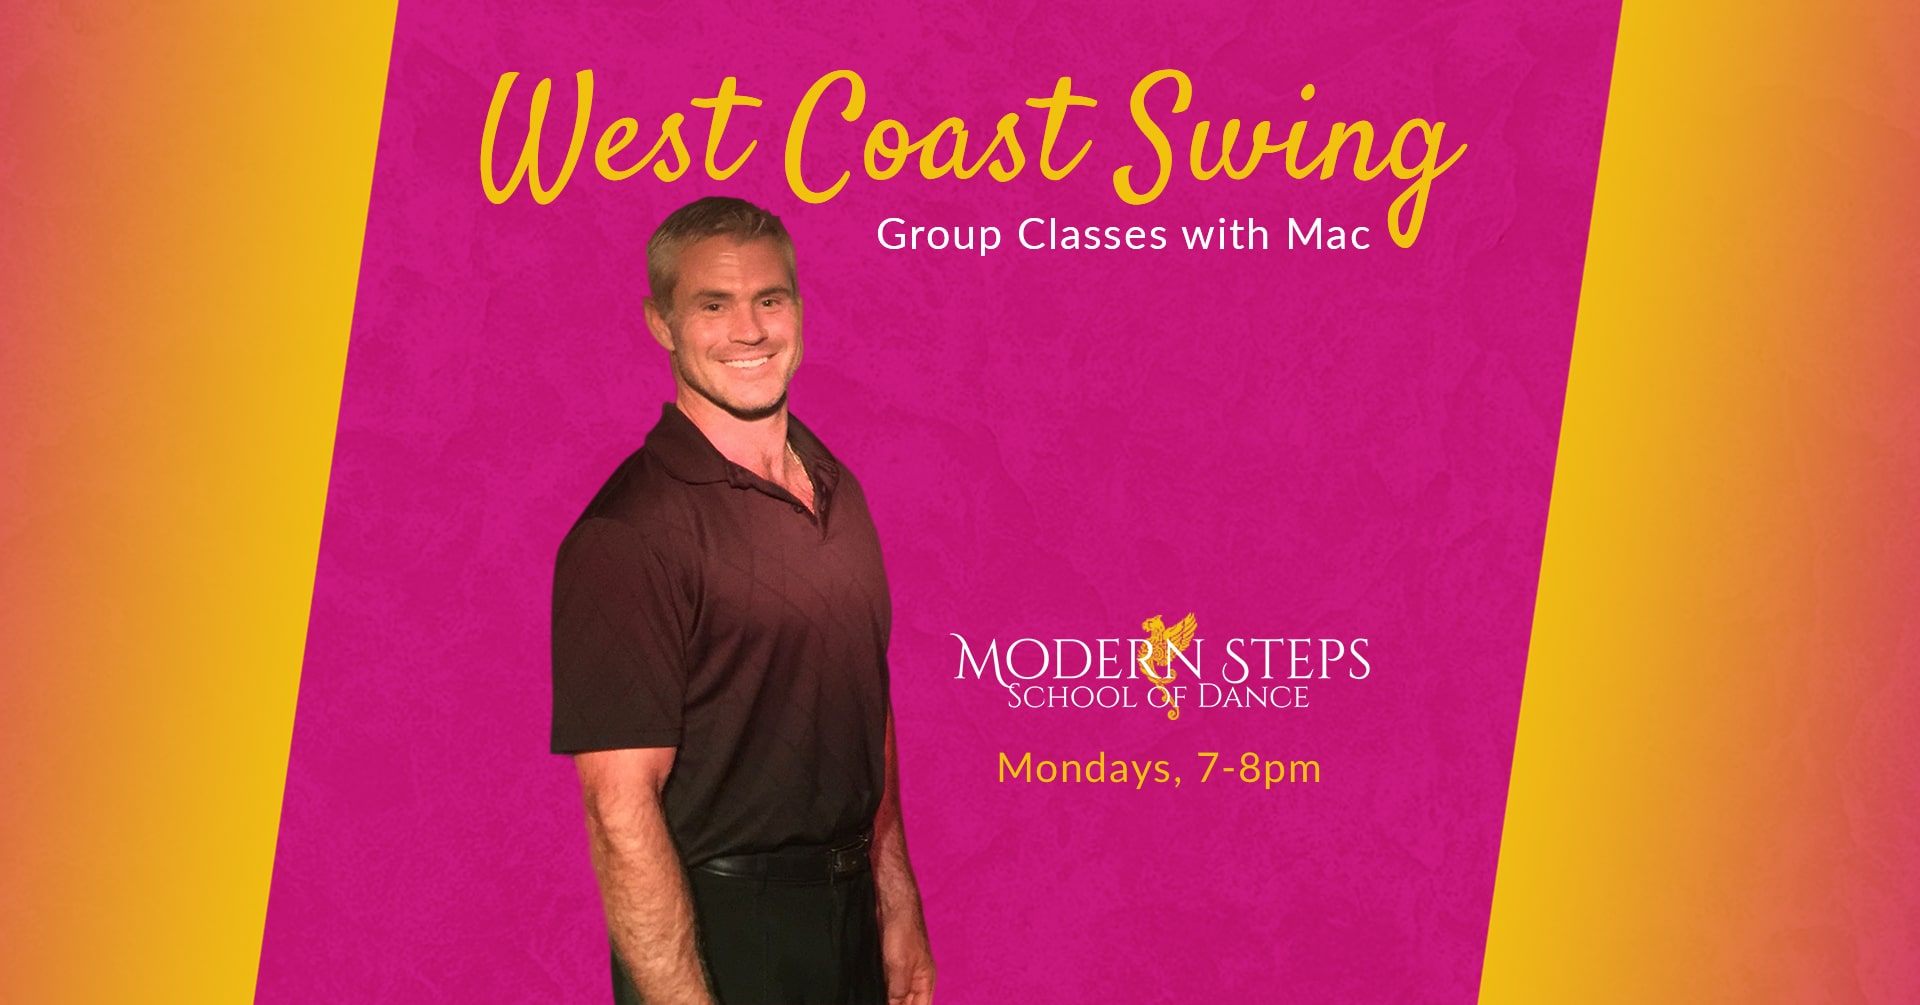 Modern Steps School of Dance Naples Florida West Coast Swing Dance Classes - Group Ballroom Dance Lessons